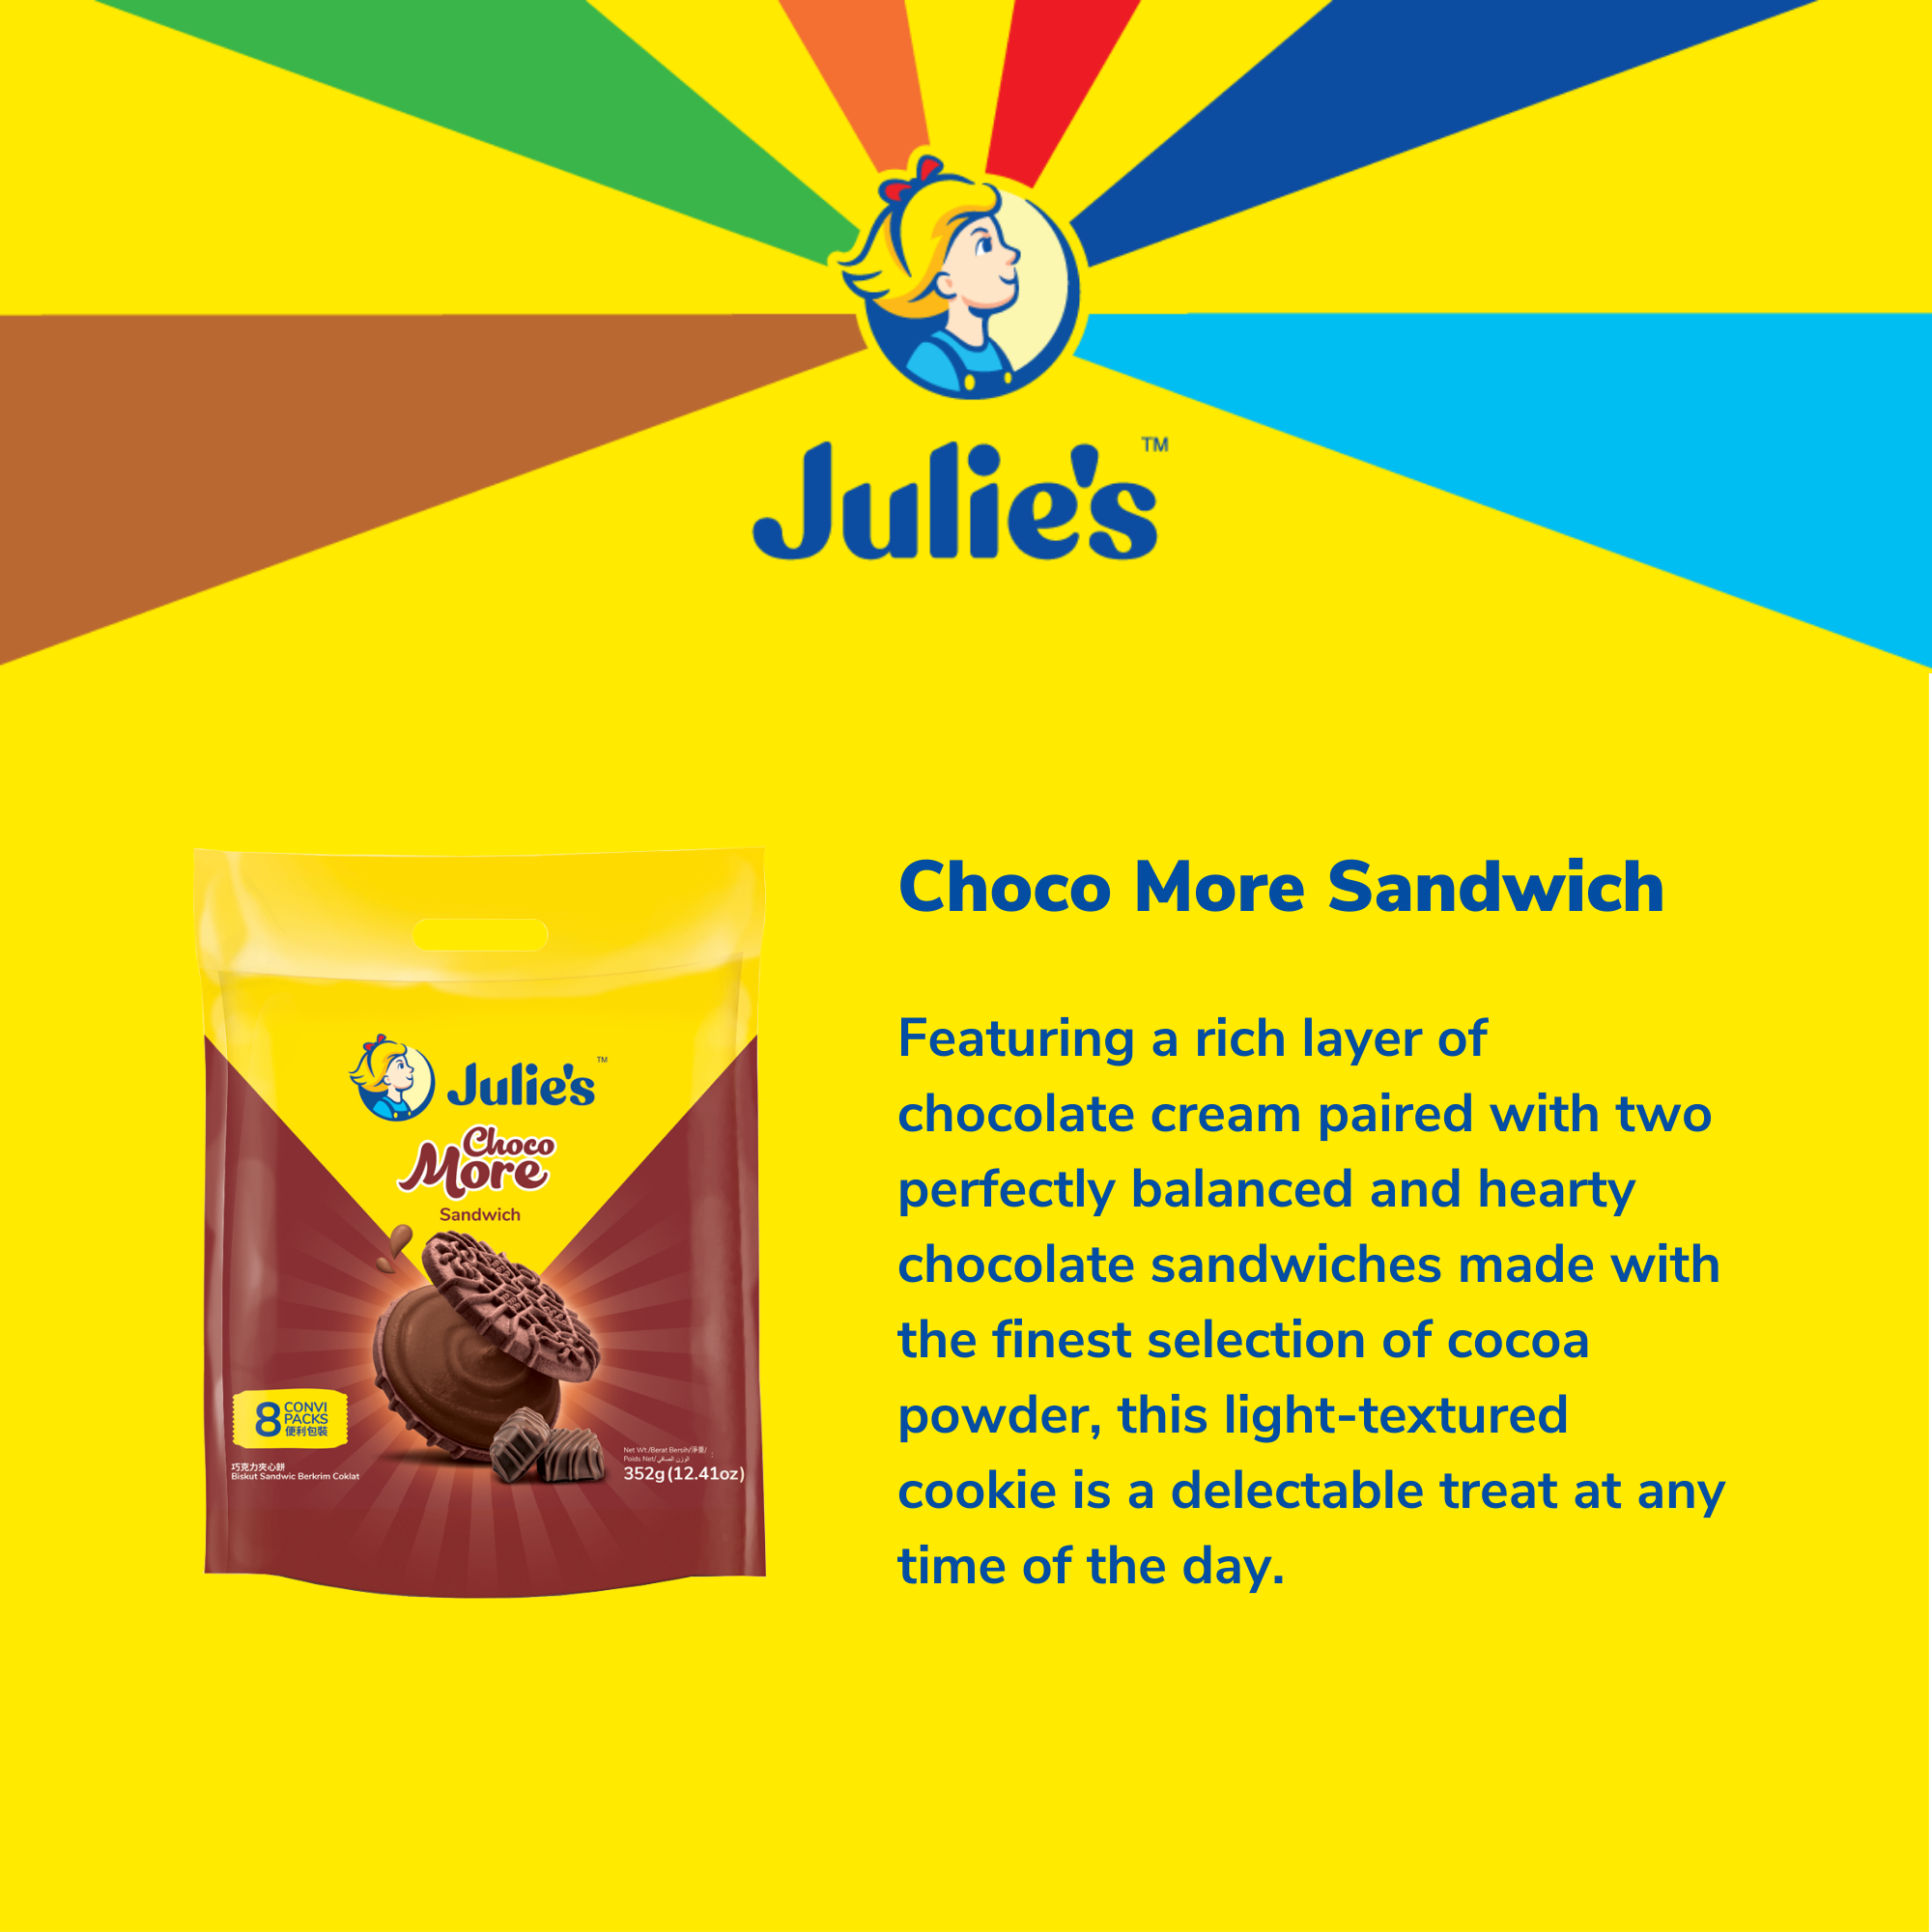 Julie's Choco More Sandwich 352g x 3 packs